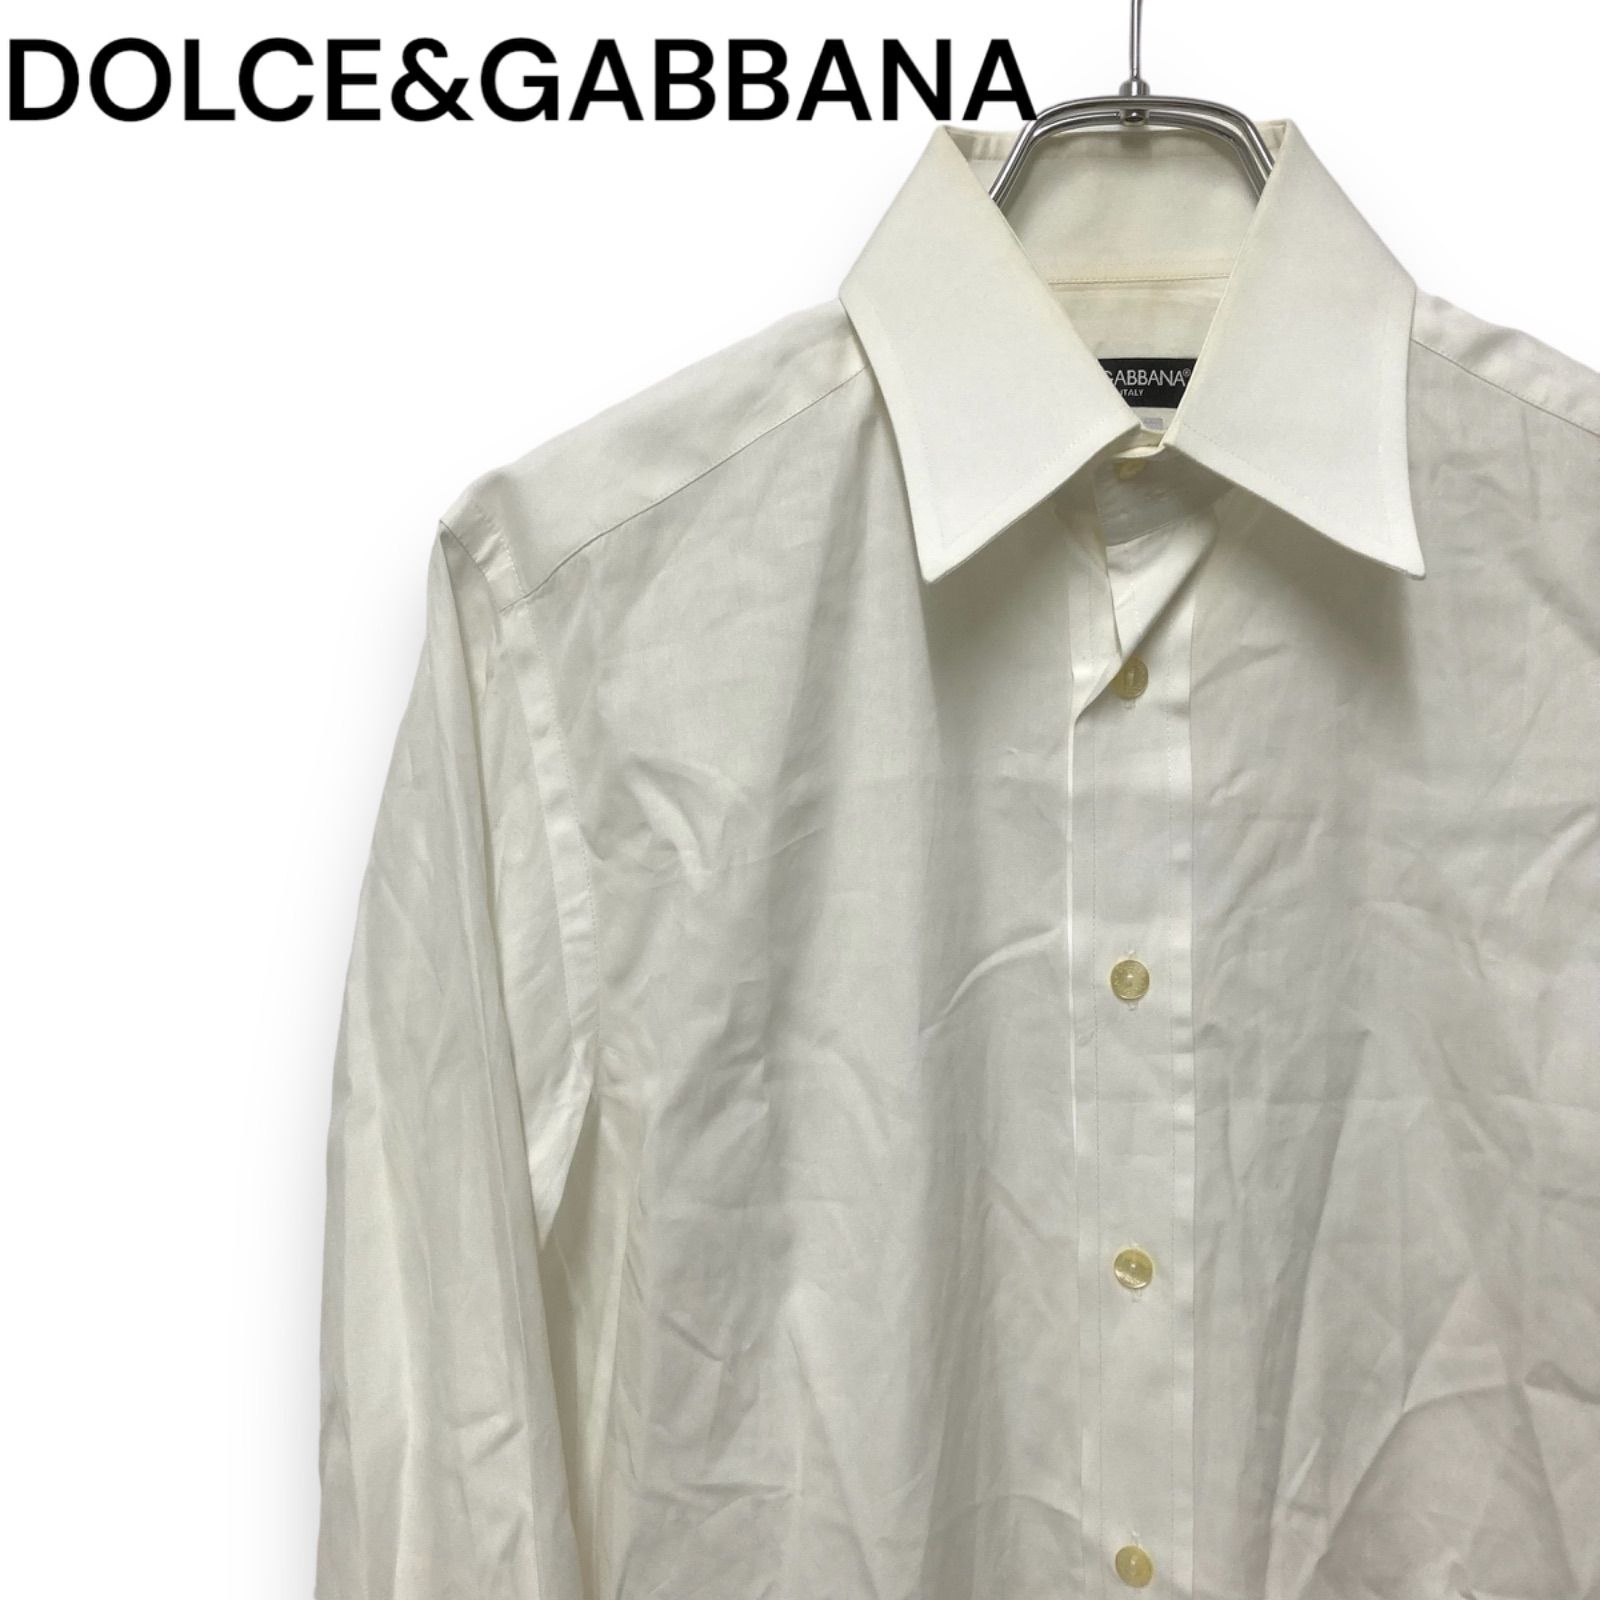 DOLCE&GABBANA ドルチェアンドガッバーナ サイズ【38】 ホワイト 白 